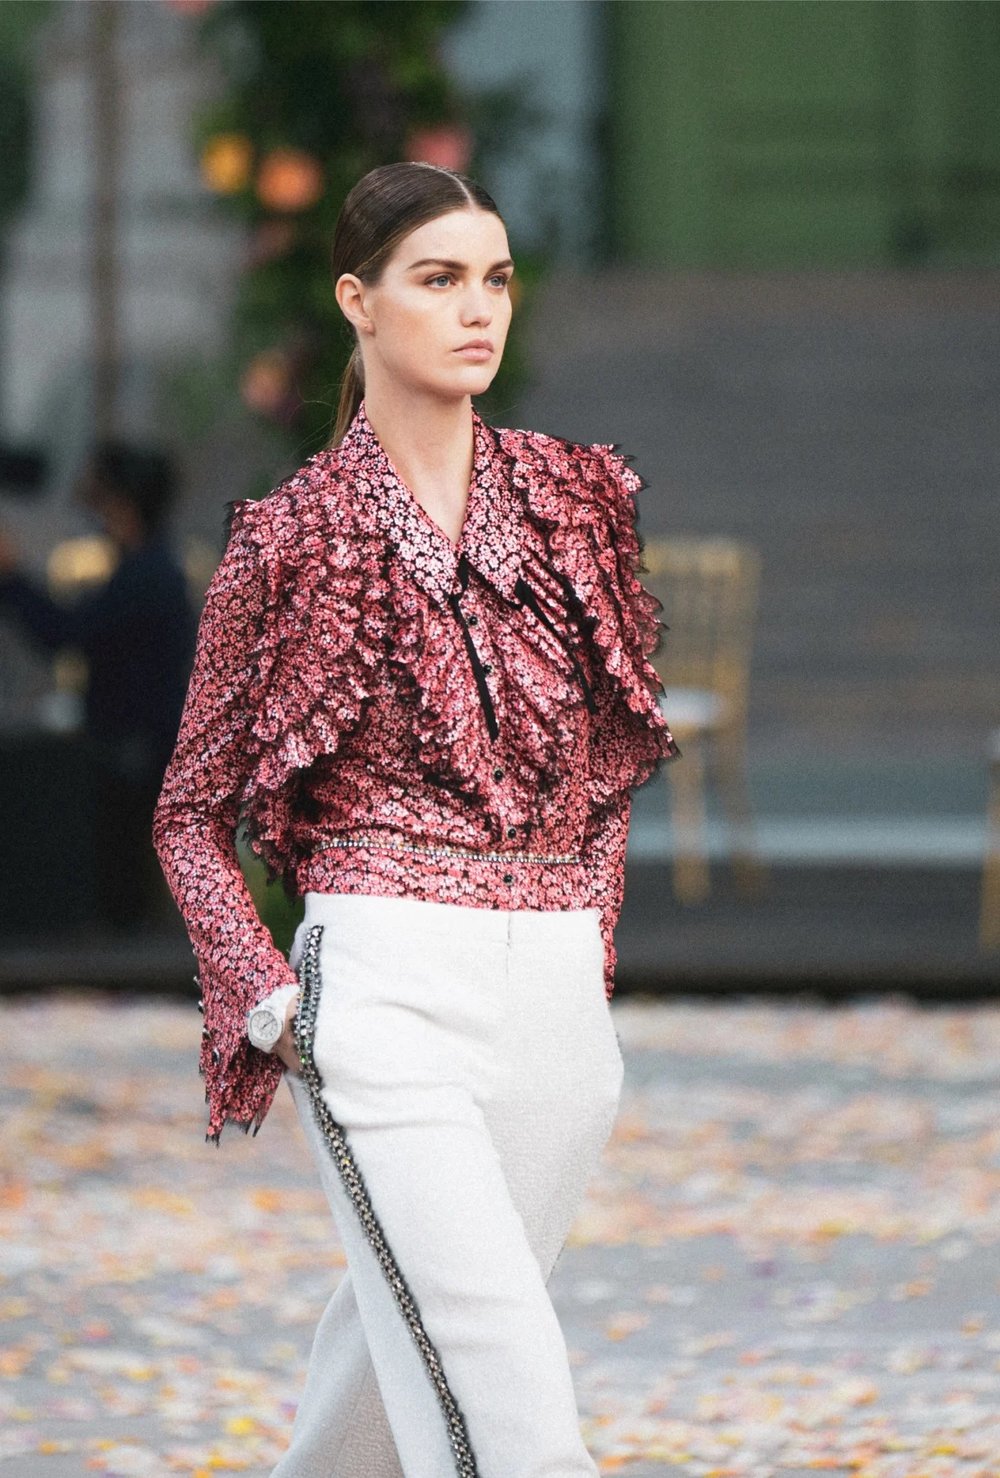 Chanel ruffle collar blouse - Gem